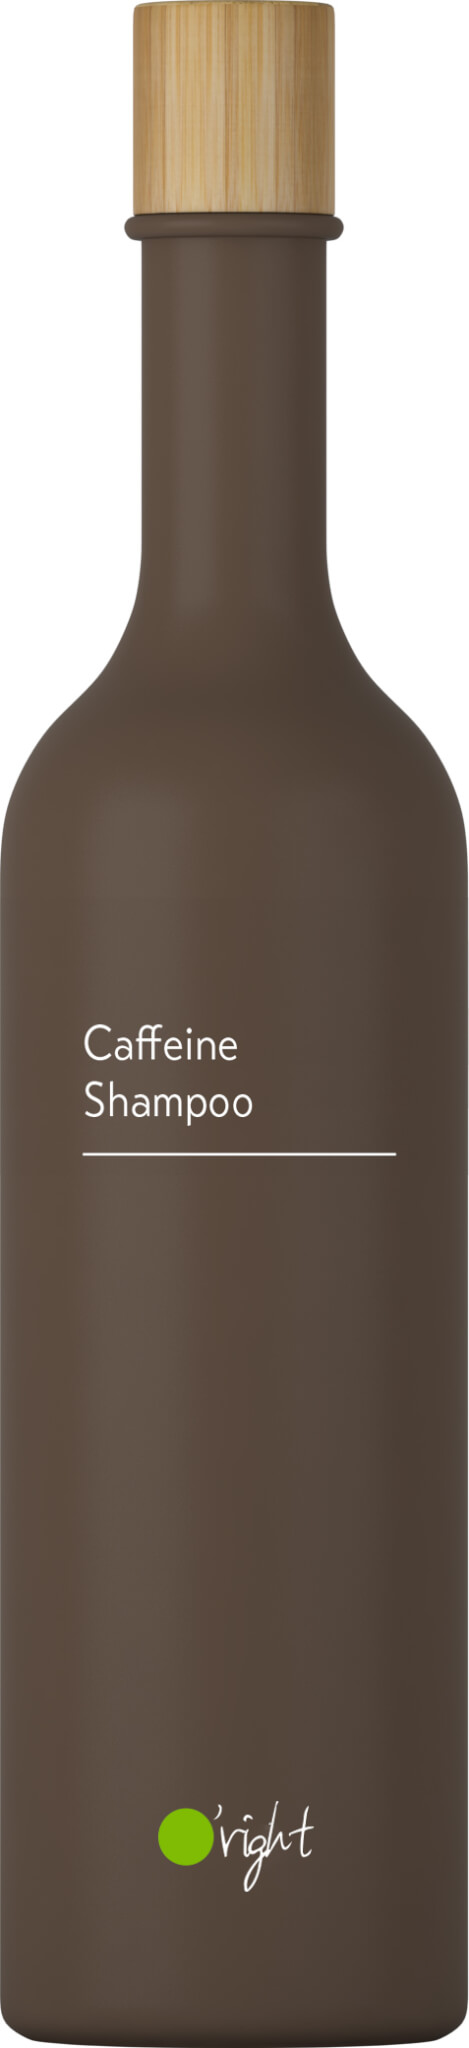 Caffeine Shampoo 400ml 2020 1